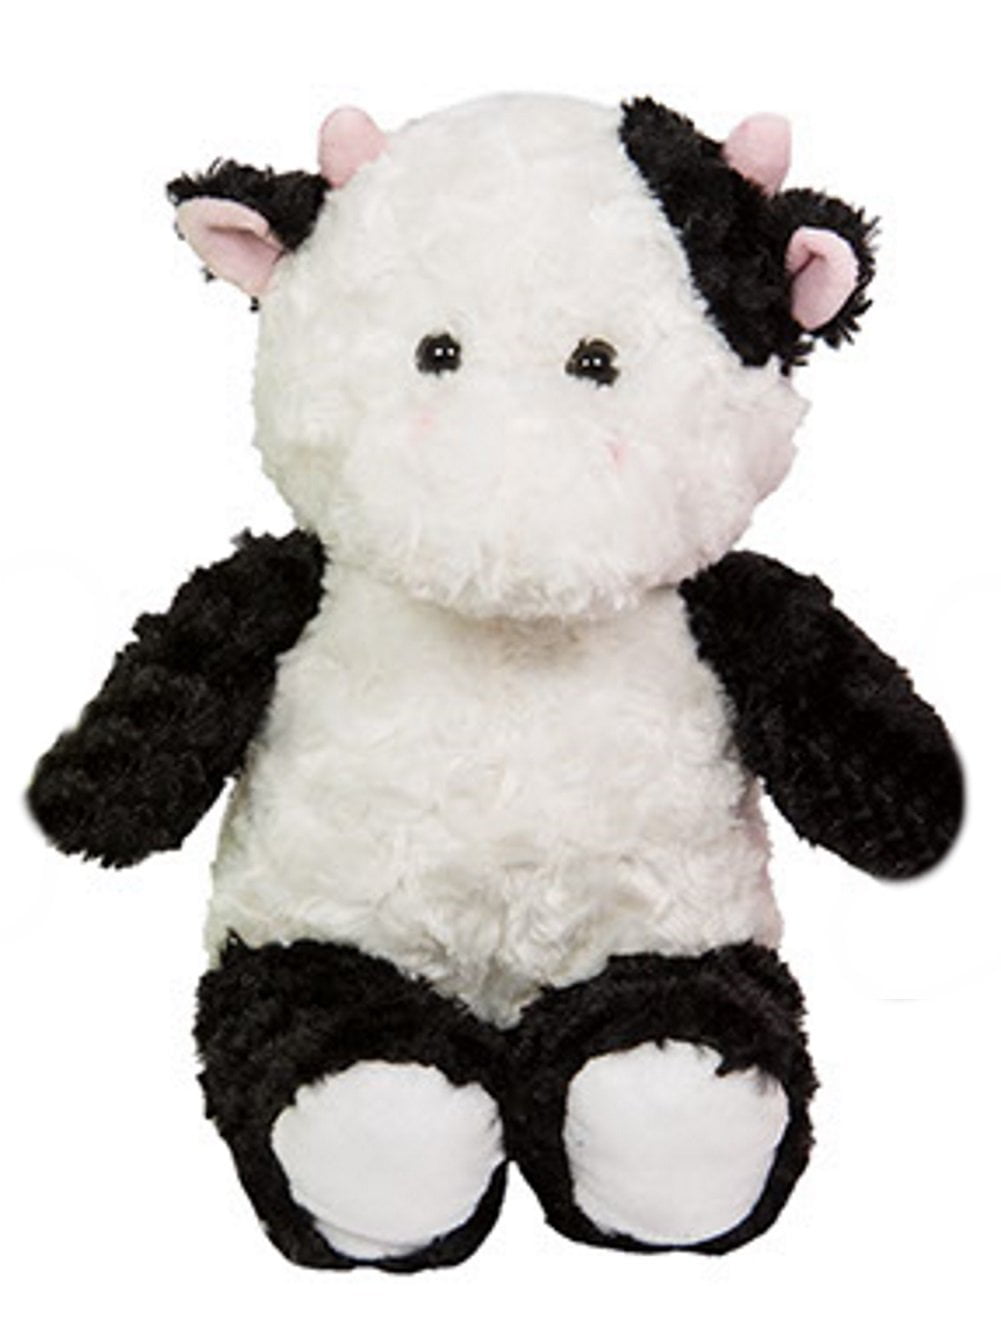 Holstein Cow Stuffed Animal - Walmart 